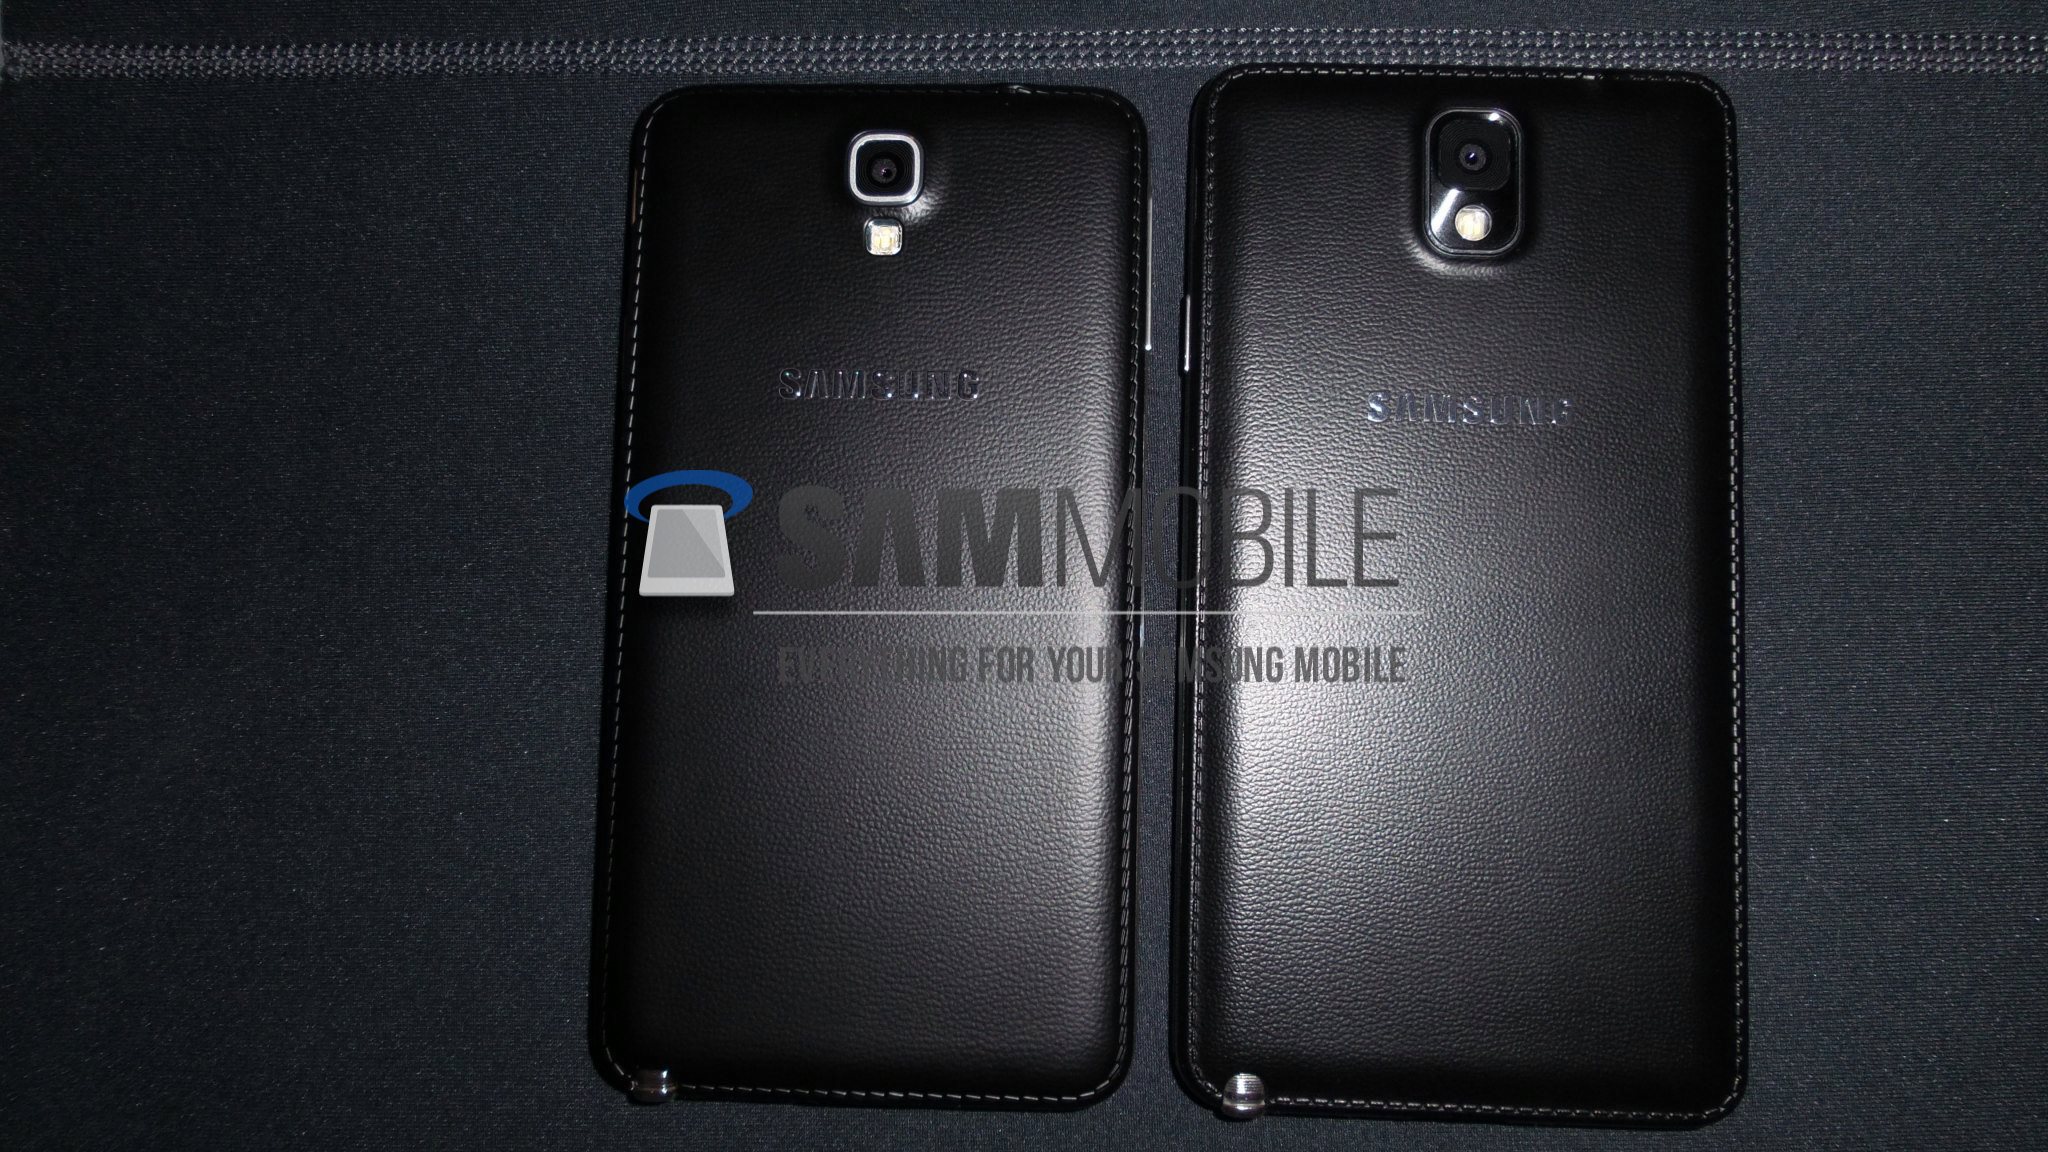 Samsung cong bo hinh anh chinh thuc cua Galaxy Note 3 Neo - Fptshop.com.vn